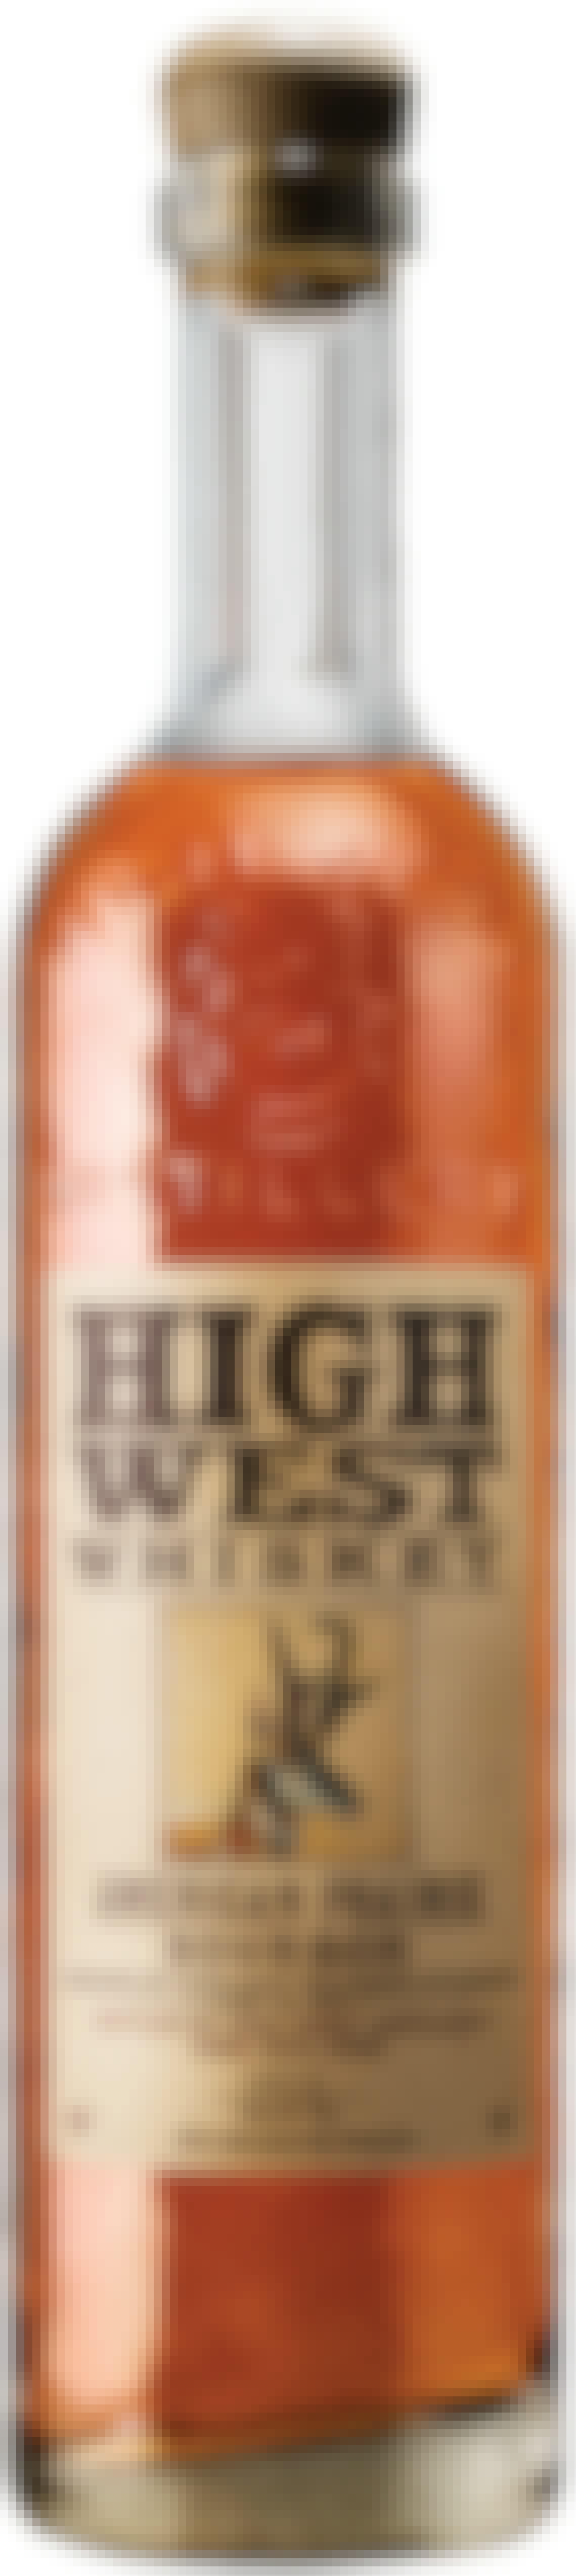 High West Distillery American Prairie Bourbon 750ml